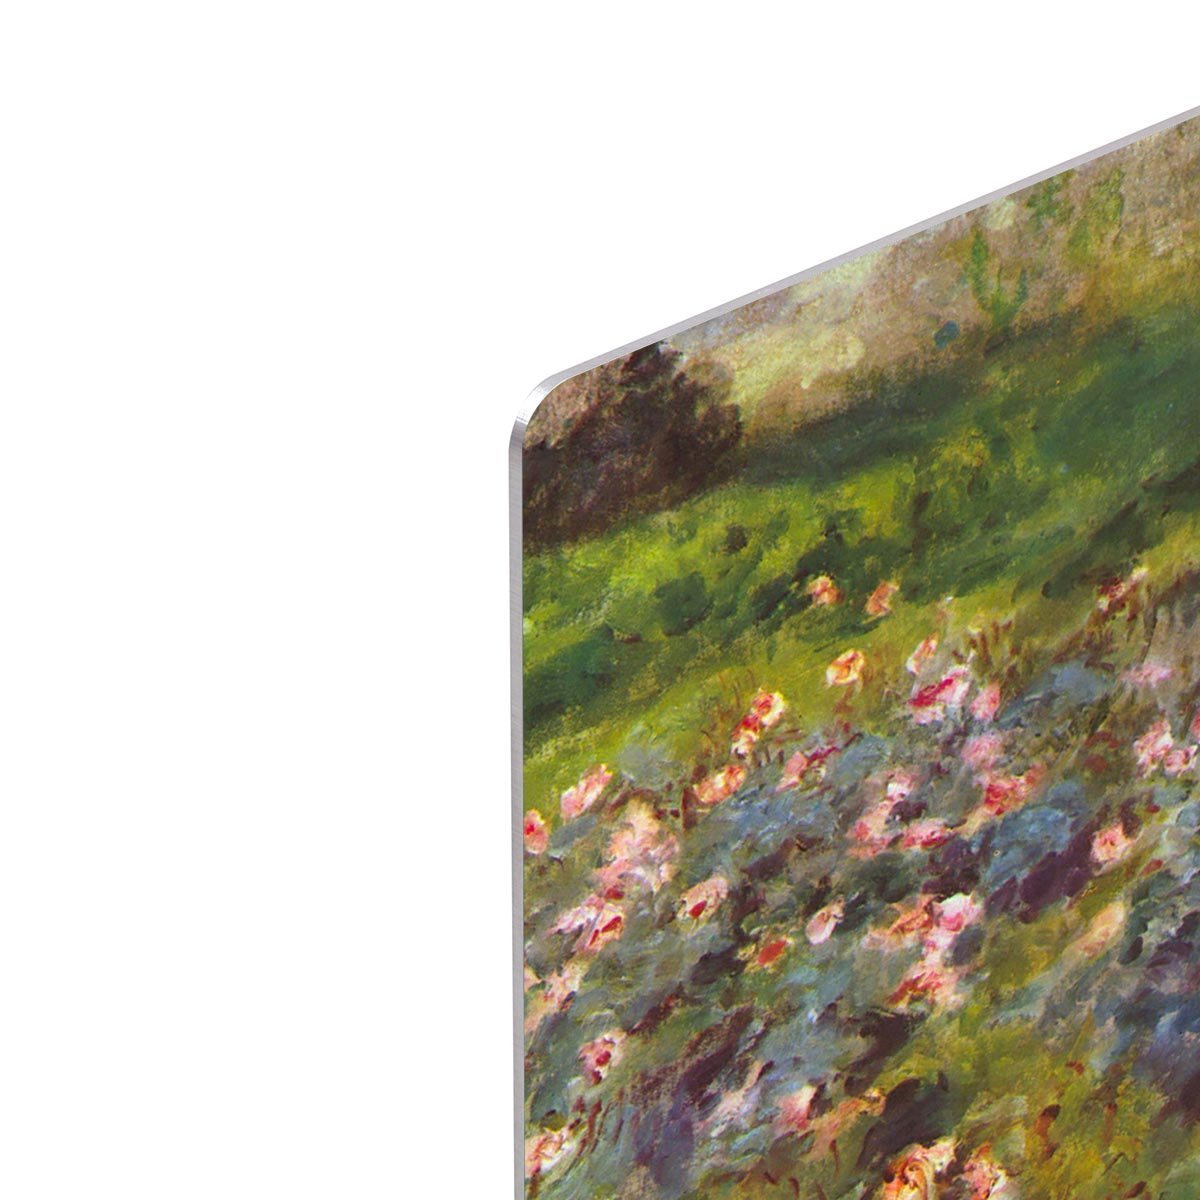 Rose Garden by Renoir HD Metal Print